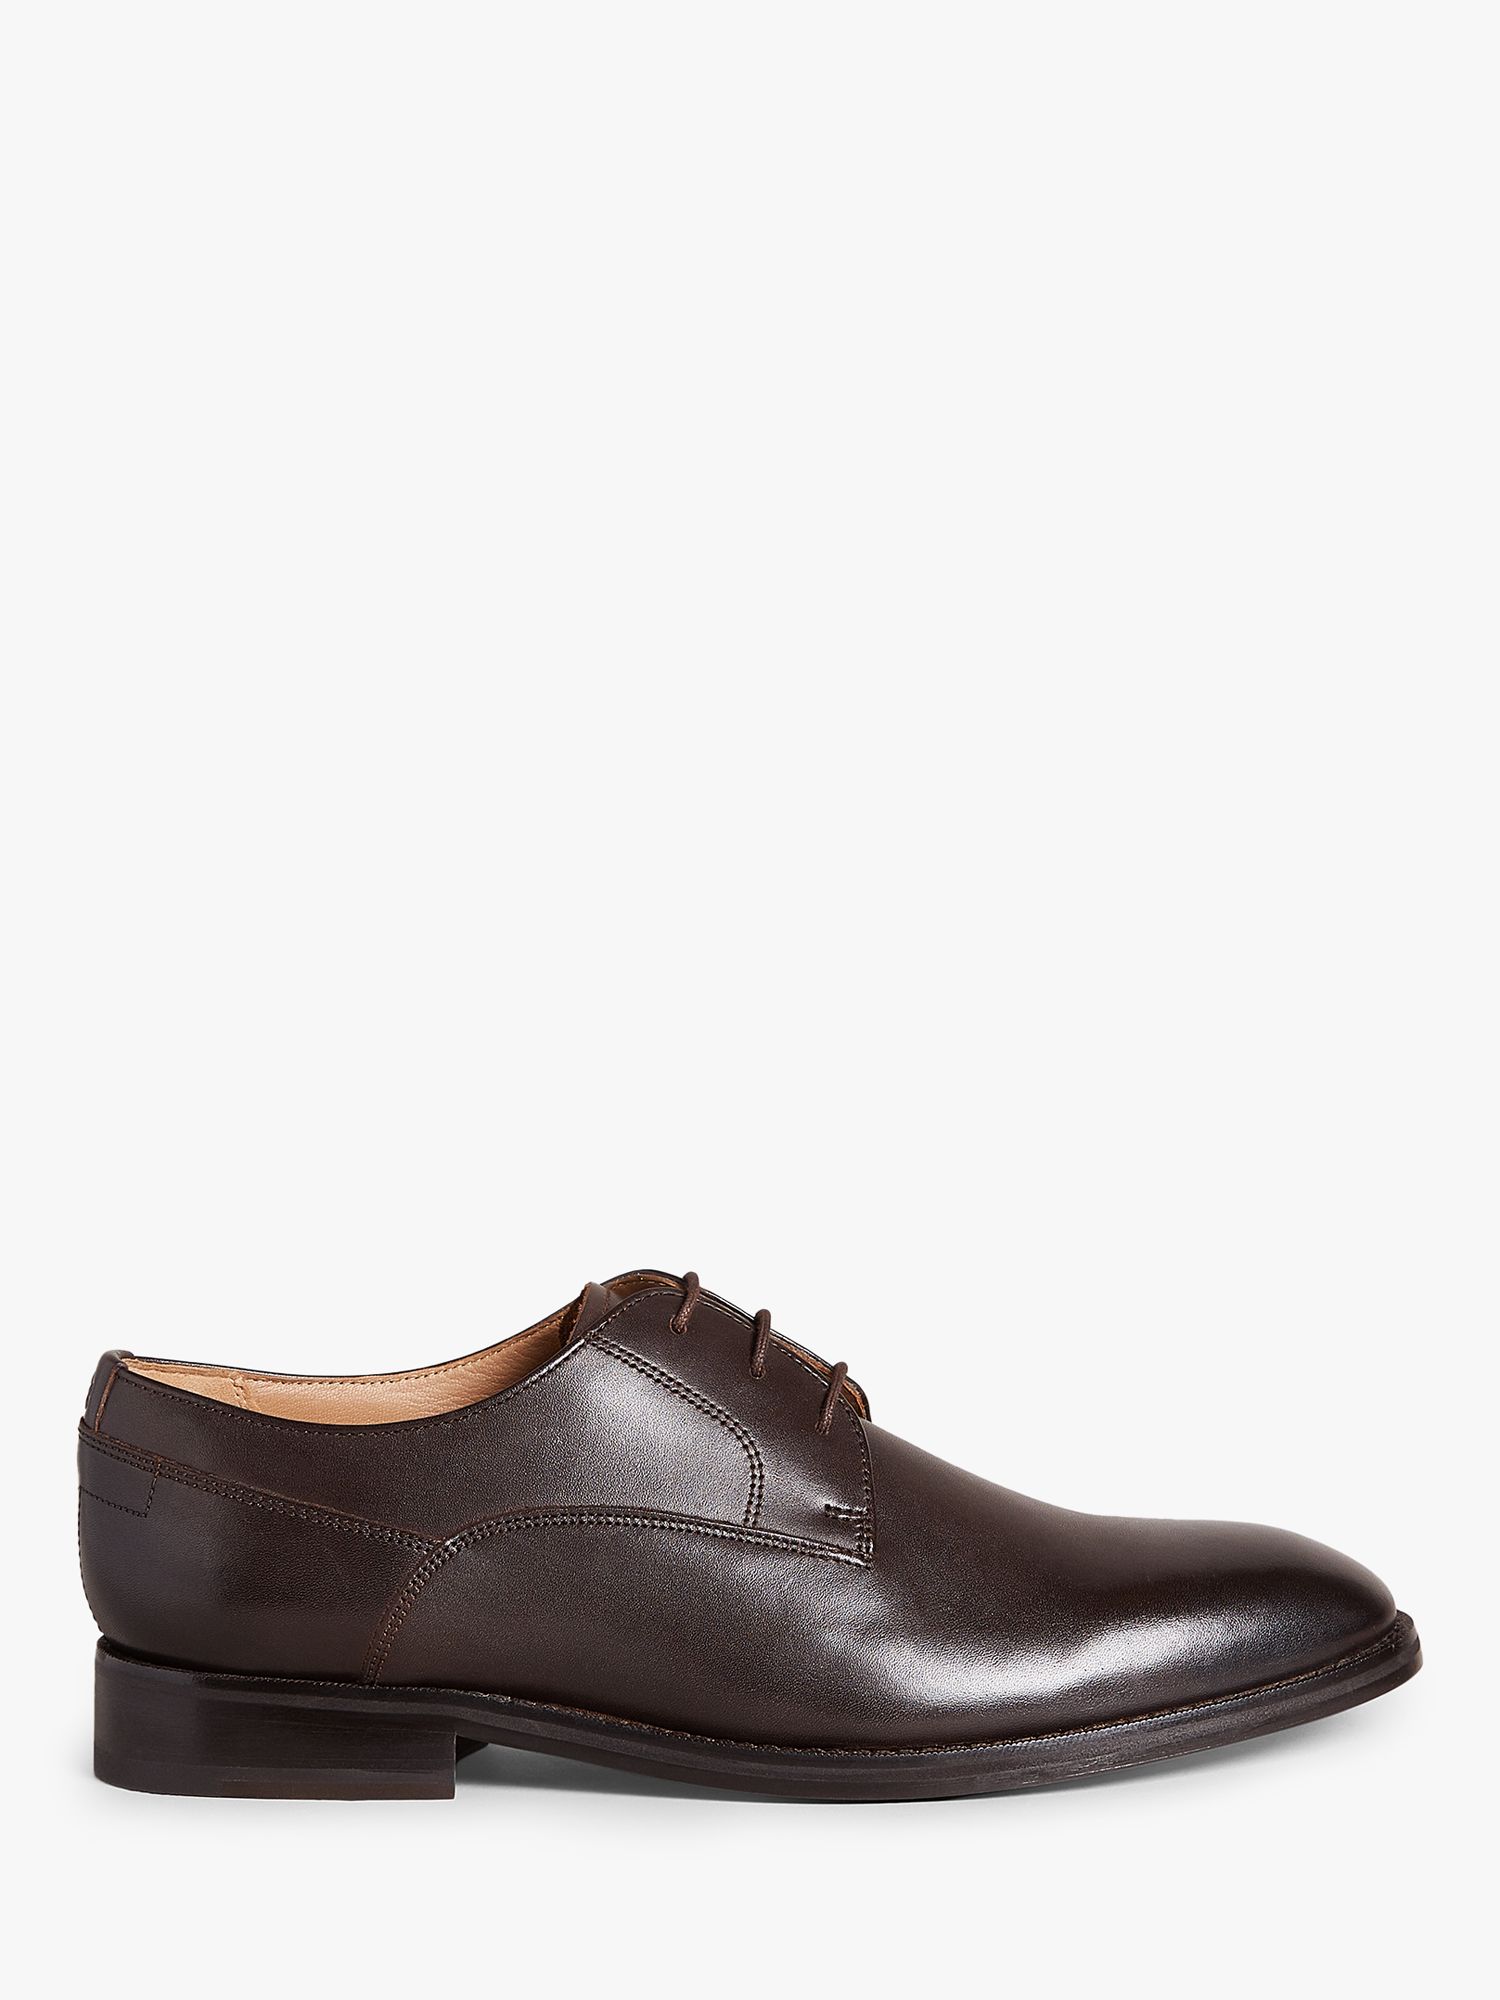 Ted Baker Kampten Leather Derby Shoes, Brown, 7